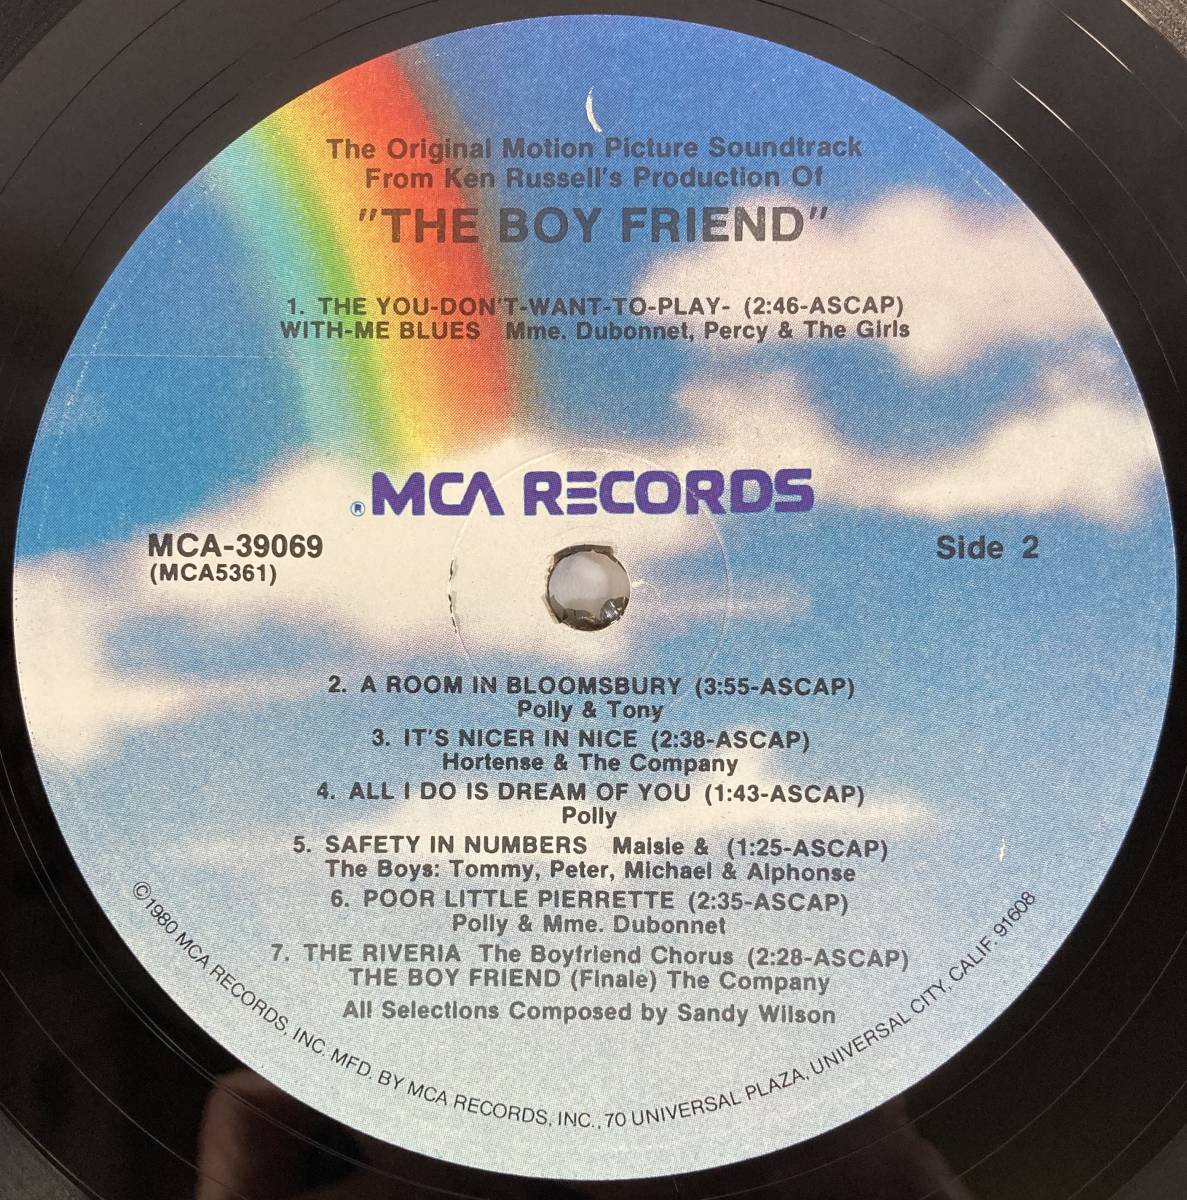  The Boy Friend (1971) Peter * Max well * Davis, Peter * зеленый * well vo:tsuigi- рис запись LP MCA MCA-39069 Cutout